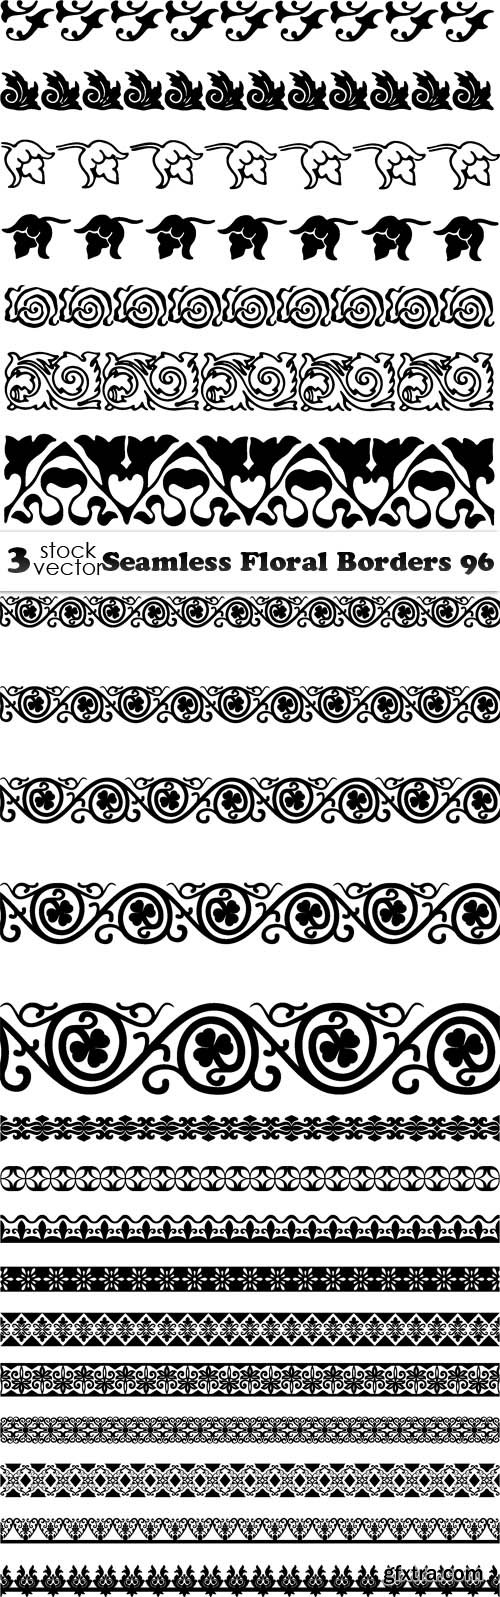 Vectors - Seamless Floral Borders 96